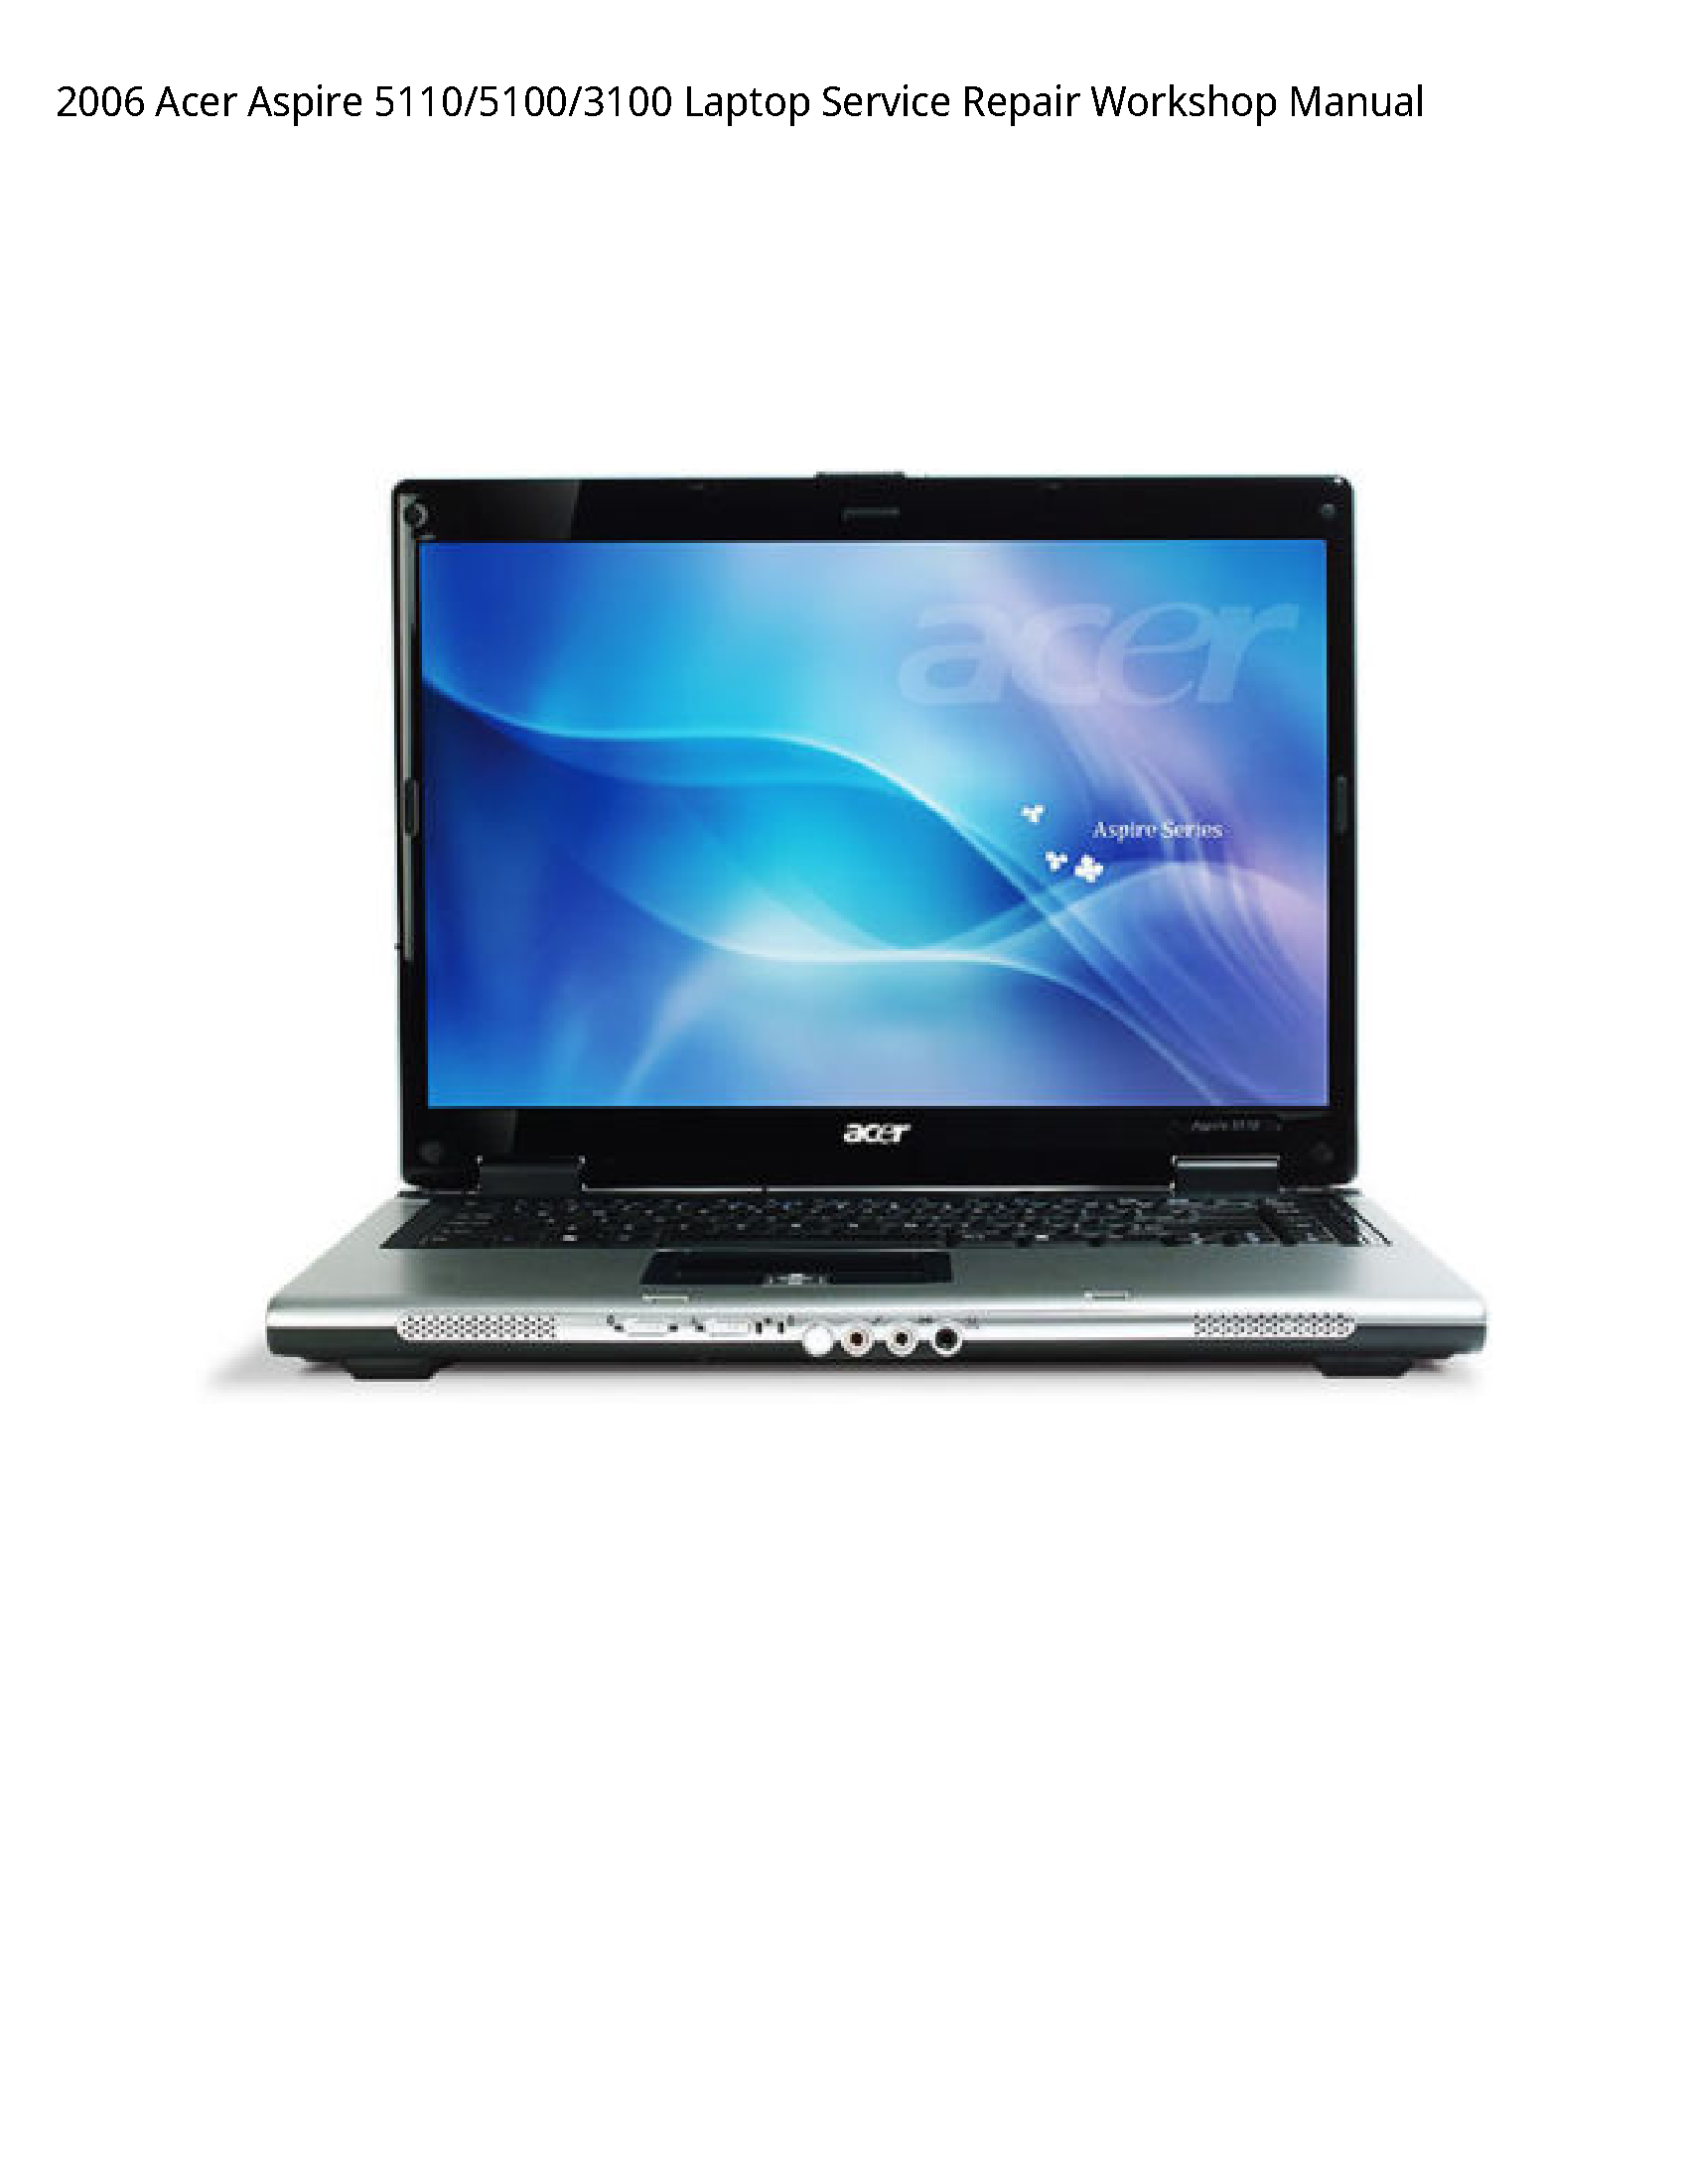 Acer 5110 Aspire Laptop manual